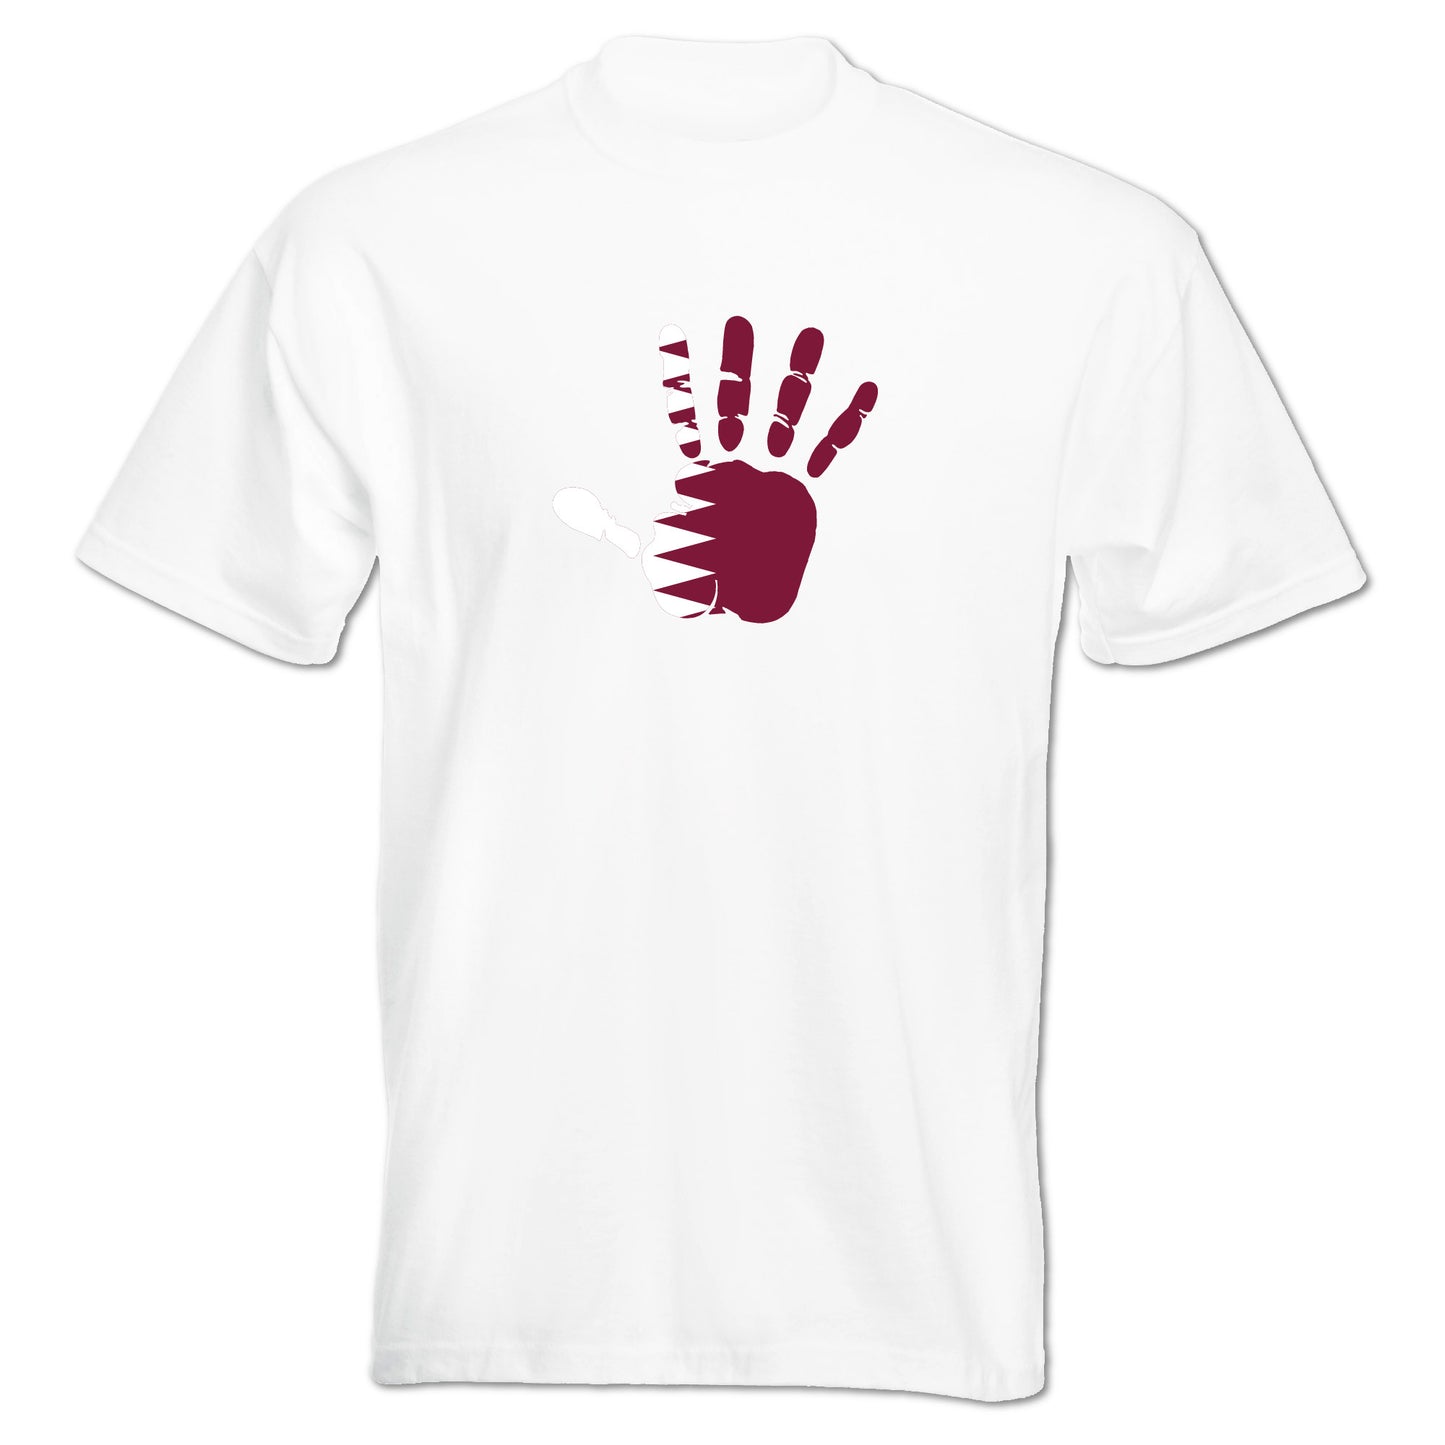 INDIGOS UG - T-Shirt Herren - Katar - Hand - Fussball